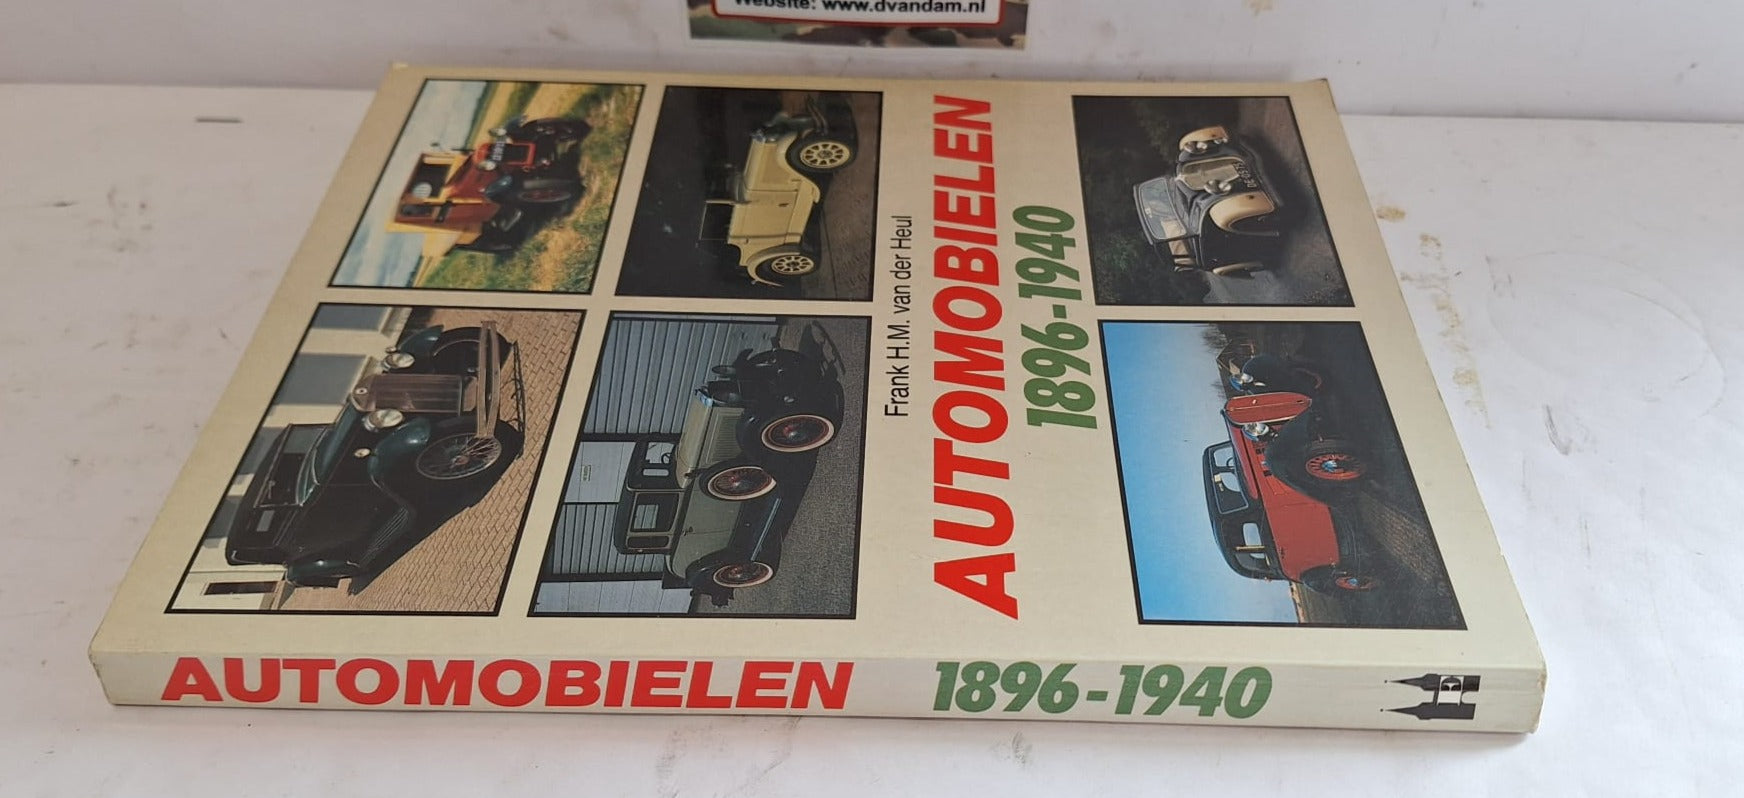 Automobielen 1896-1940 - boek